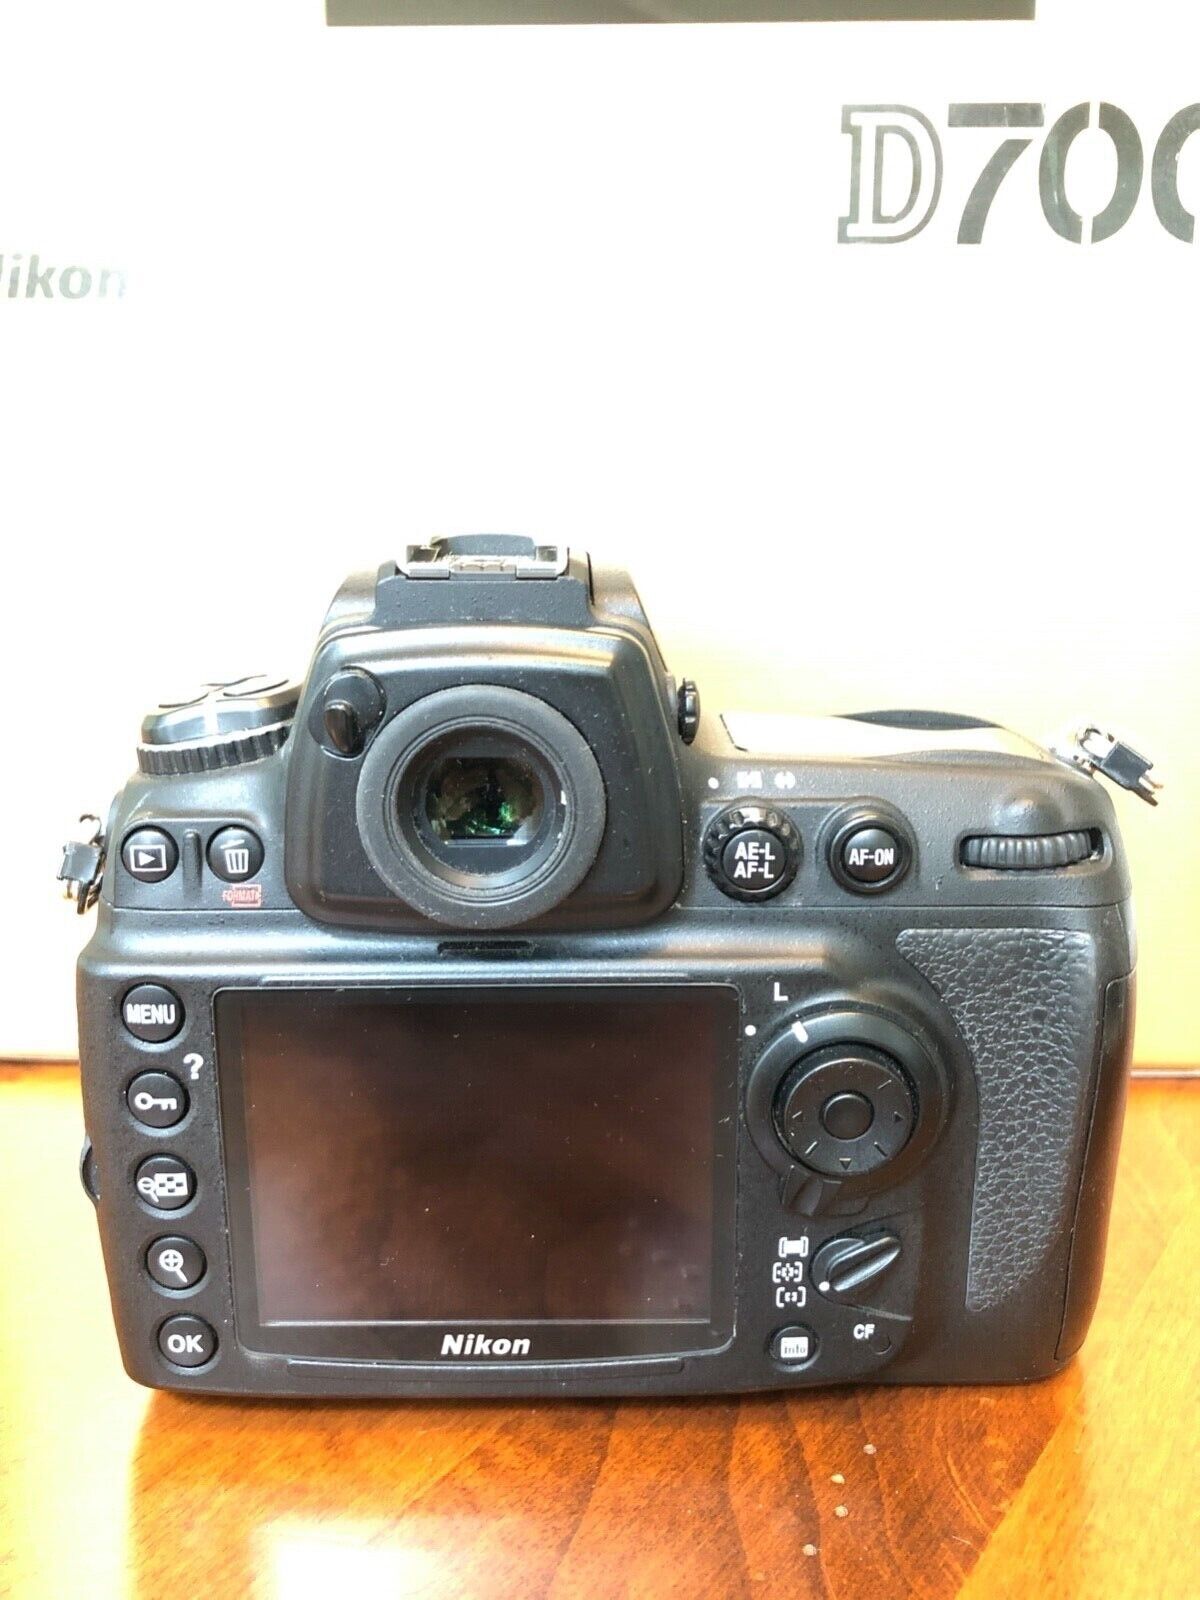 Nikon USA D700 Digital Camera - Shutter count 22,000 [Excellent ] in Box, plus !